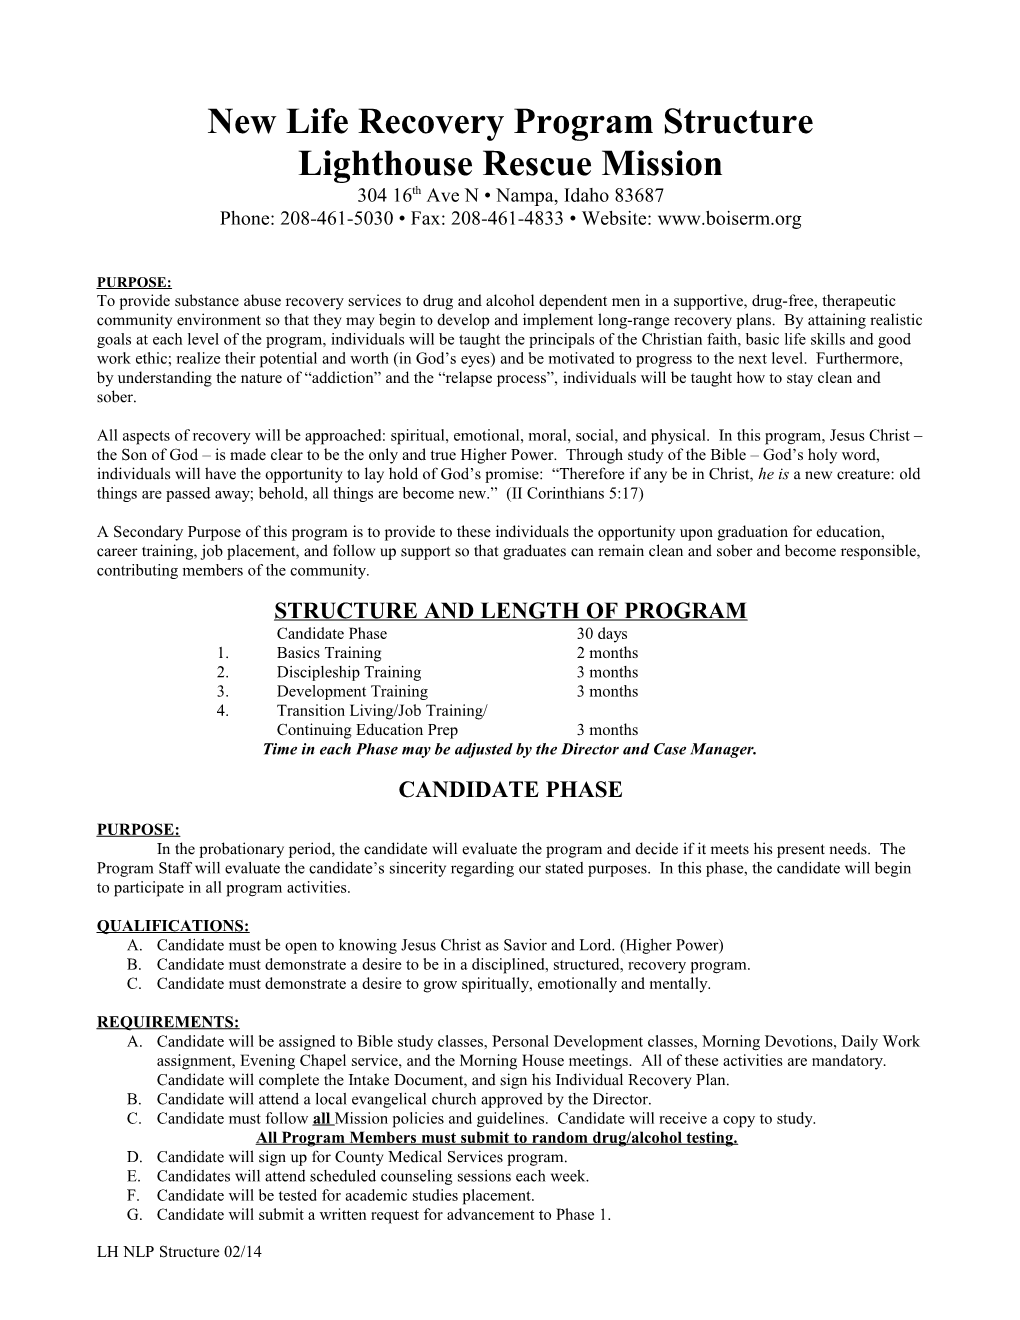 Boise Rescue Mission Ministries